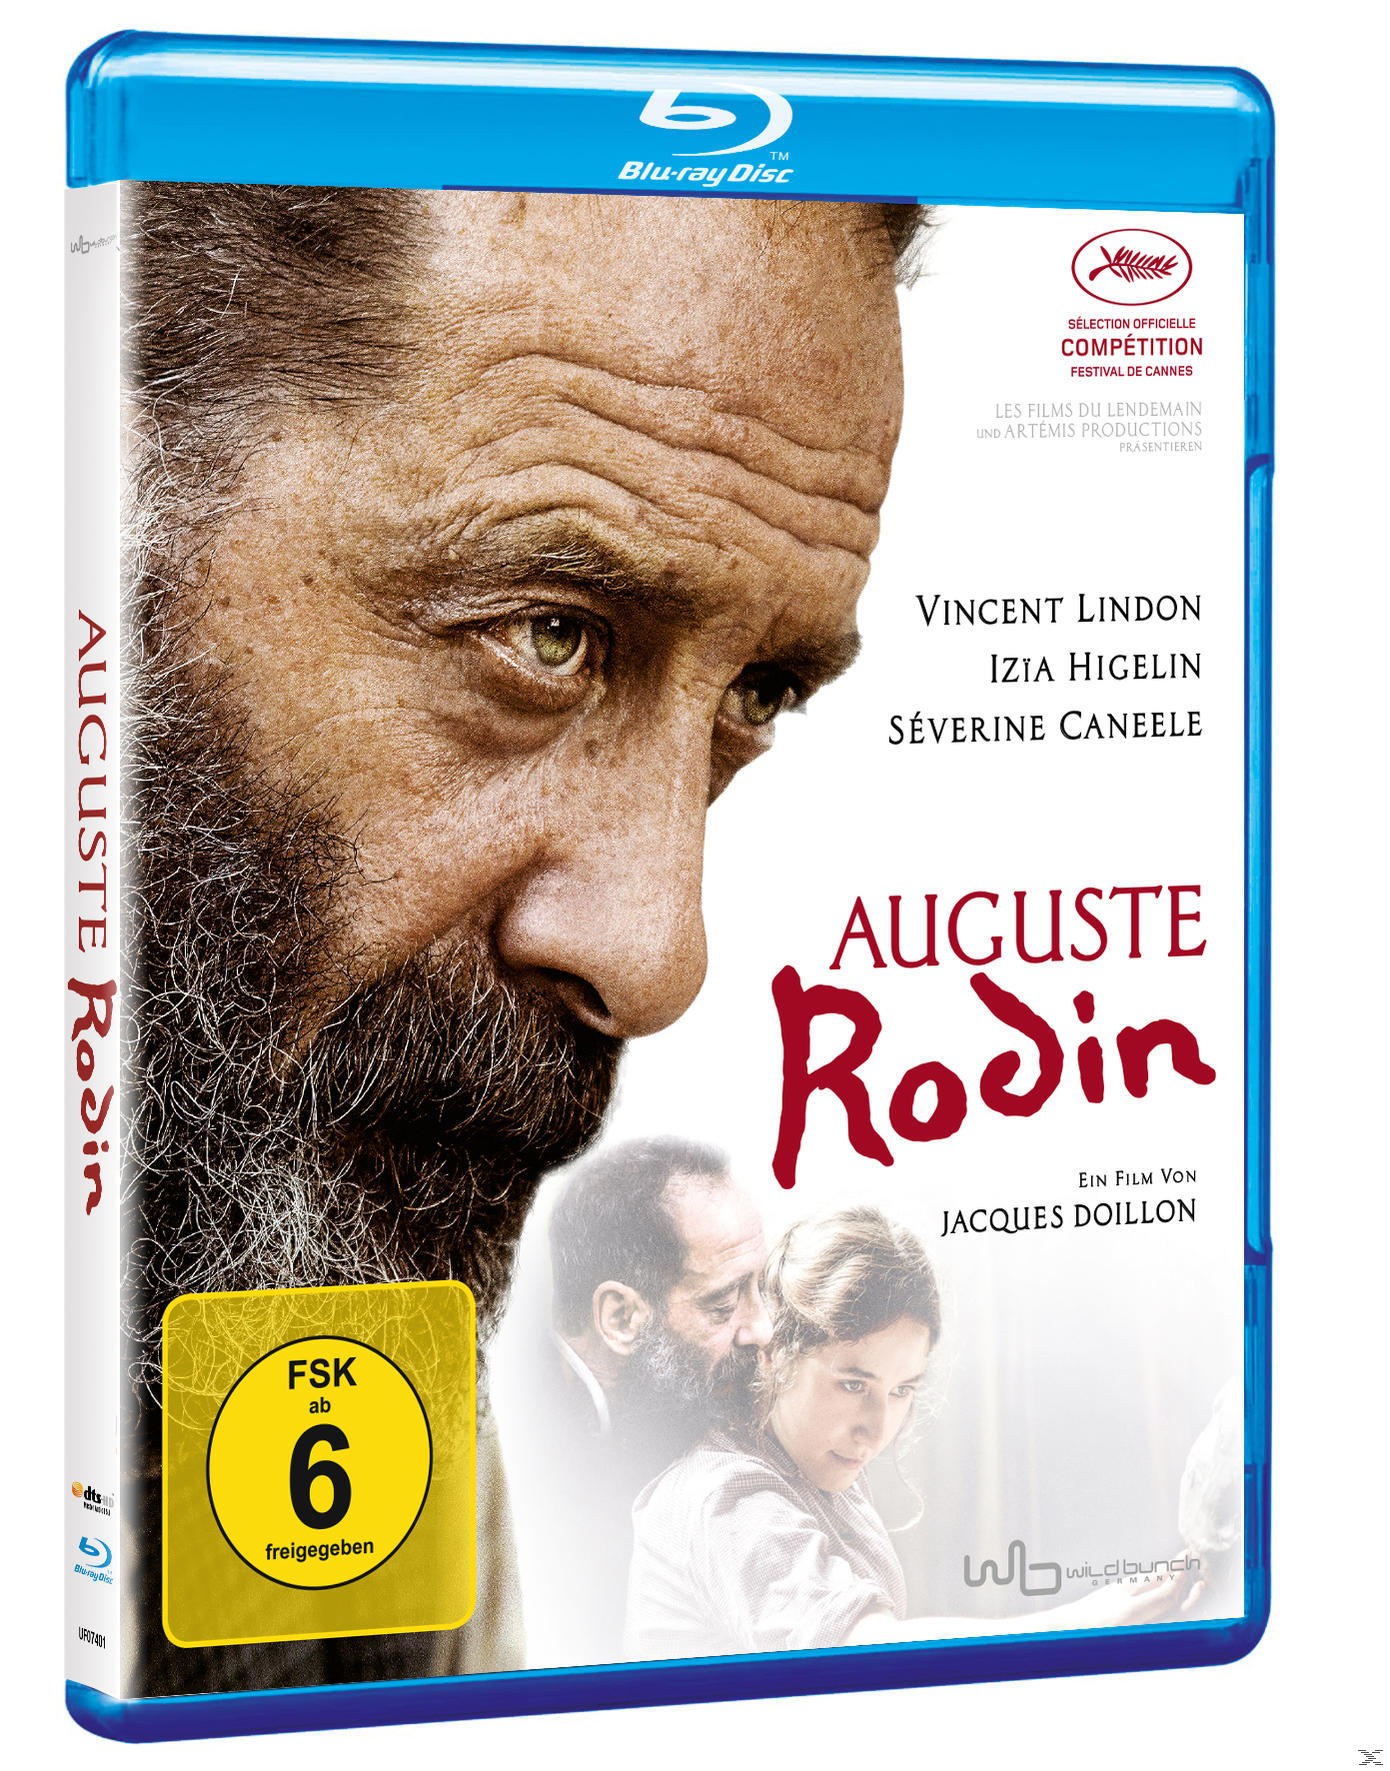 Rodin Auguste Blu-ray